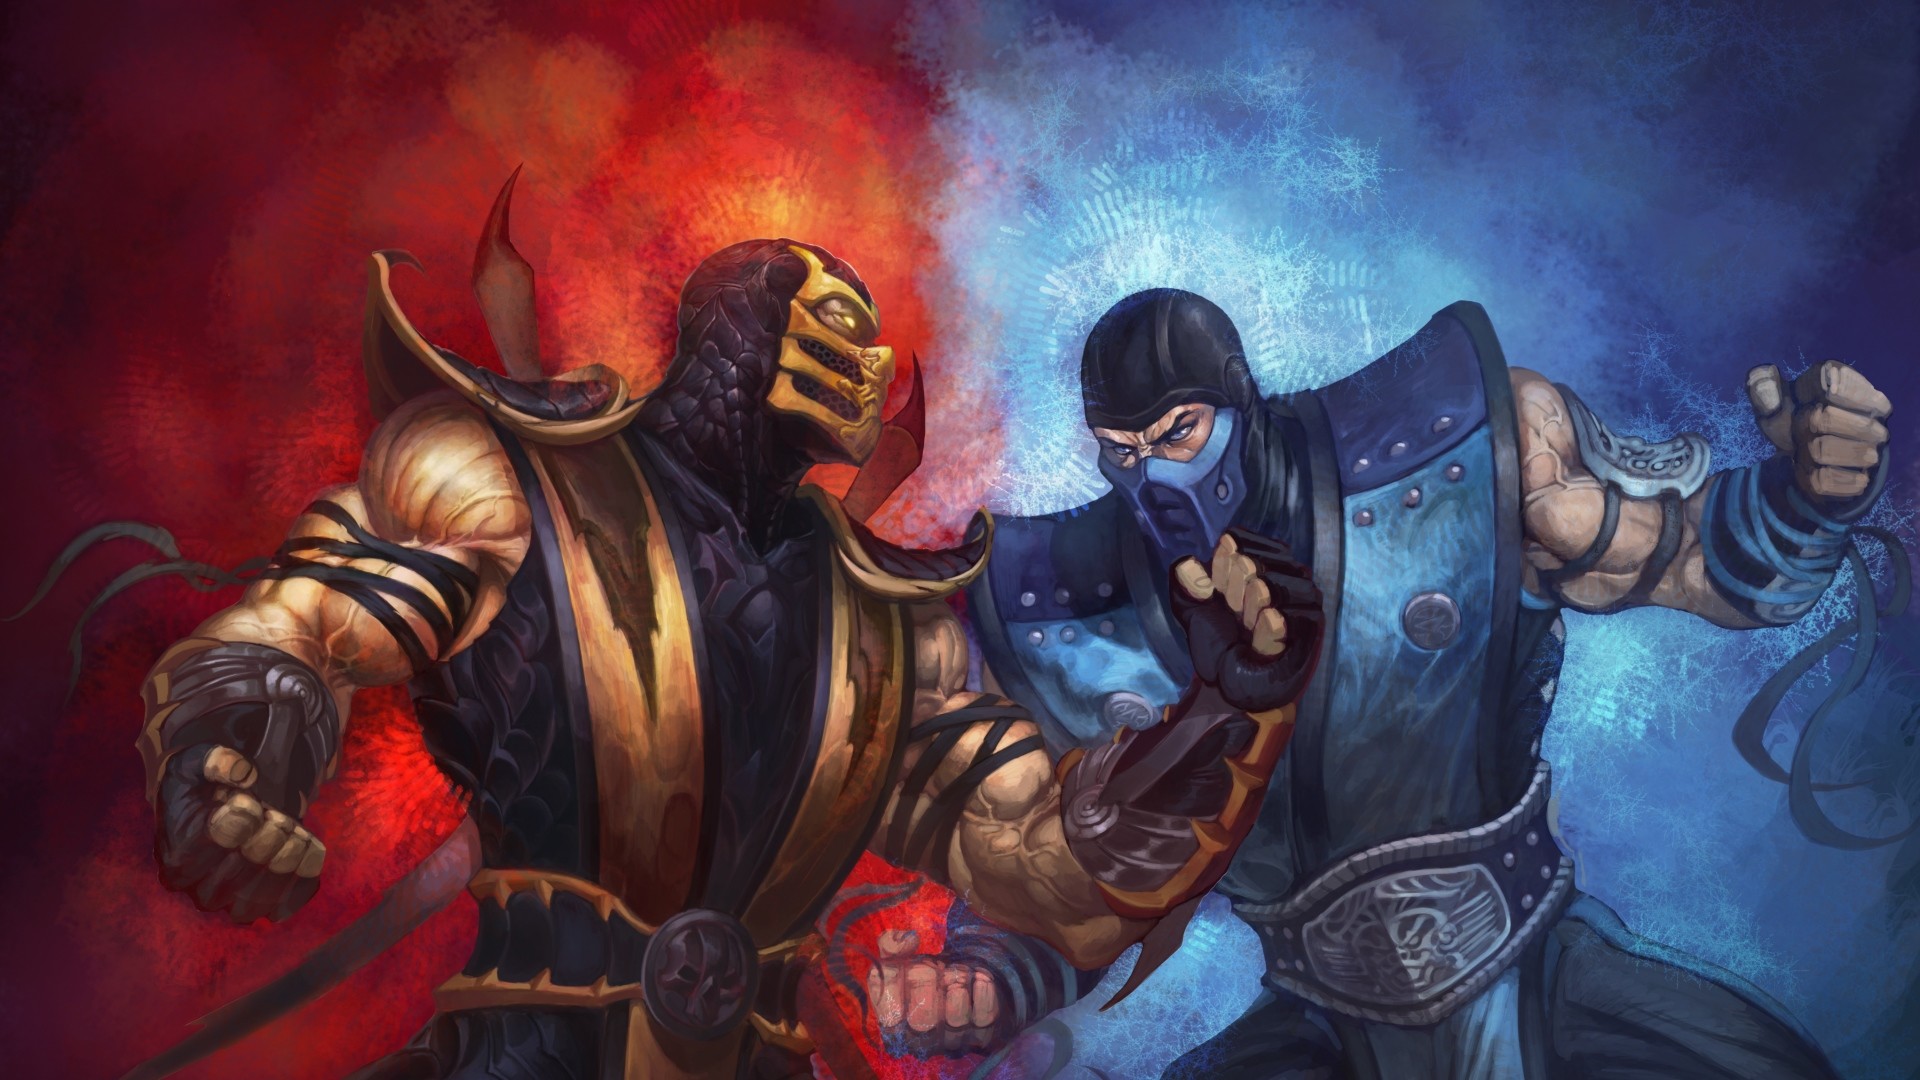 Mortal Kombat Scorpion vs Sub Zero Wallpaper ·① WallpaperTag